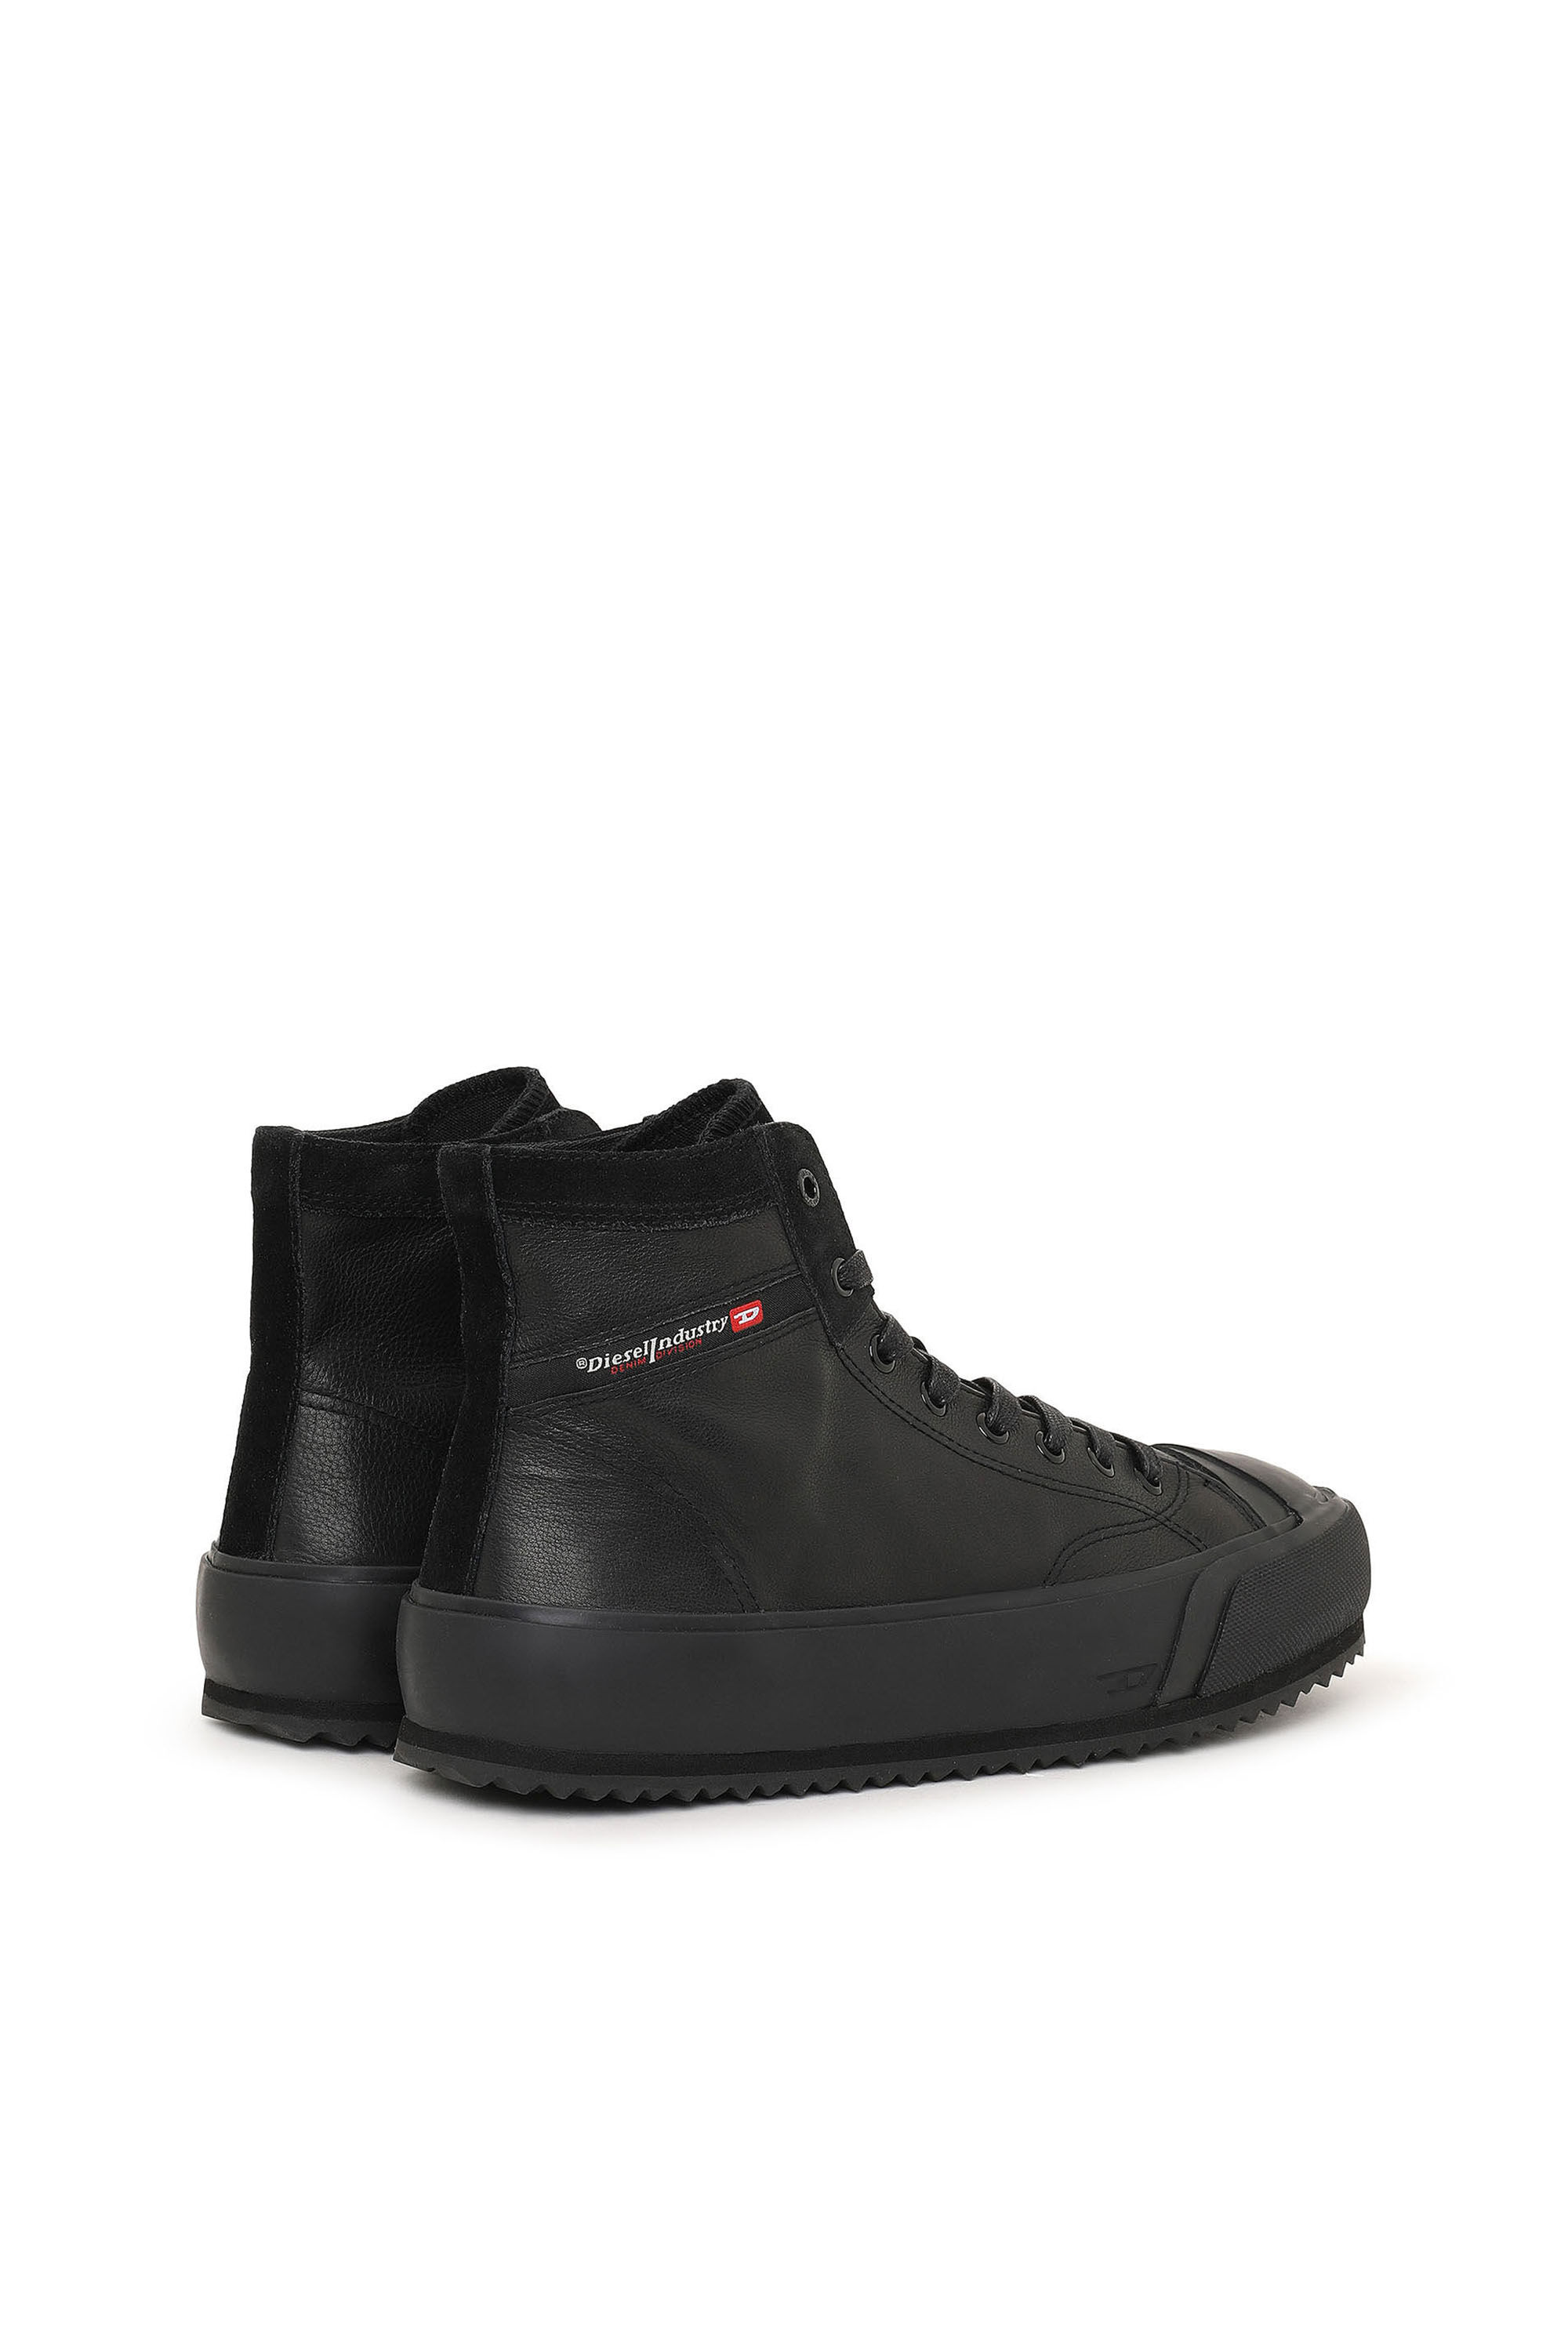 S-PRINCIPIA MID X Unisex: High-top sneakers in leather | Diesel